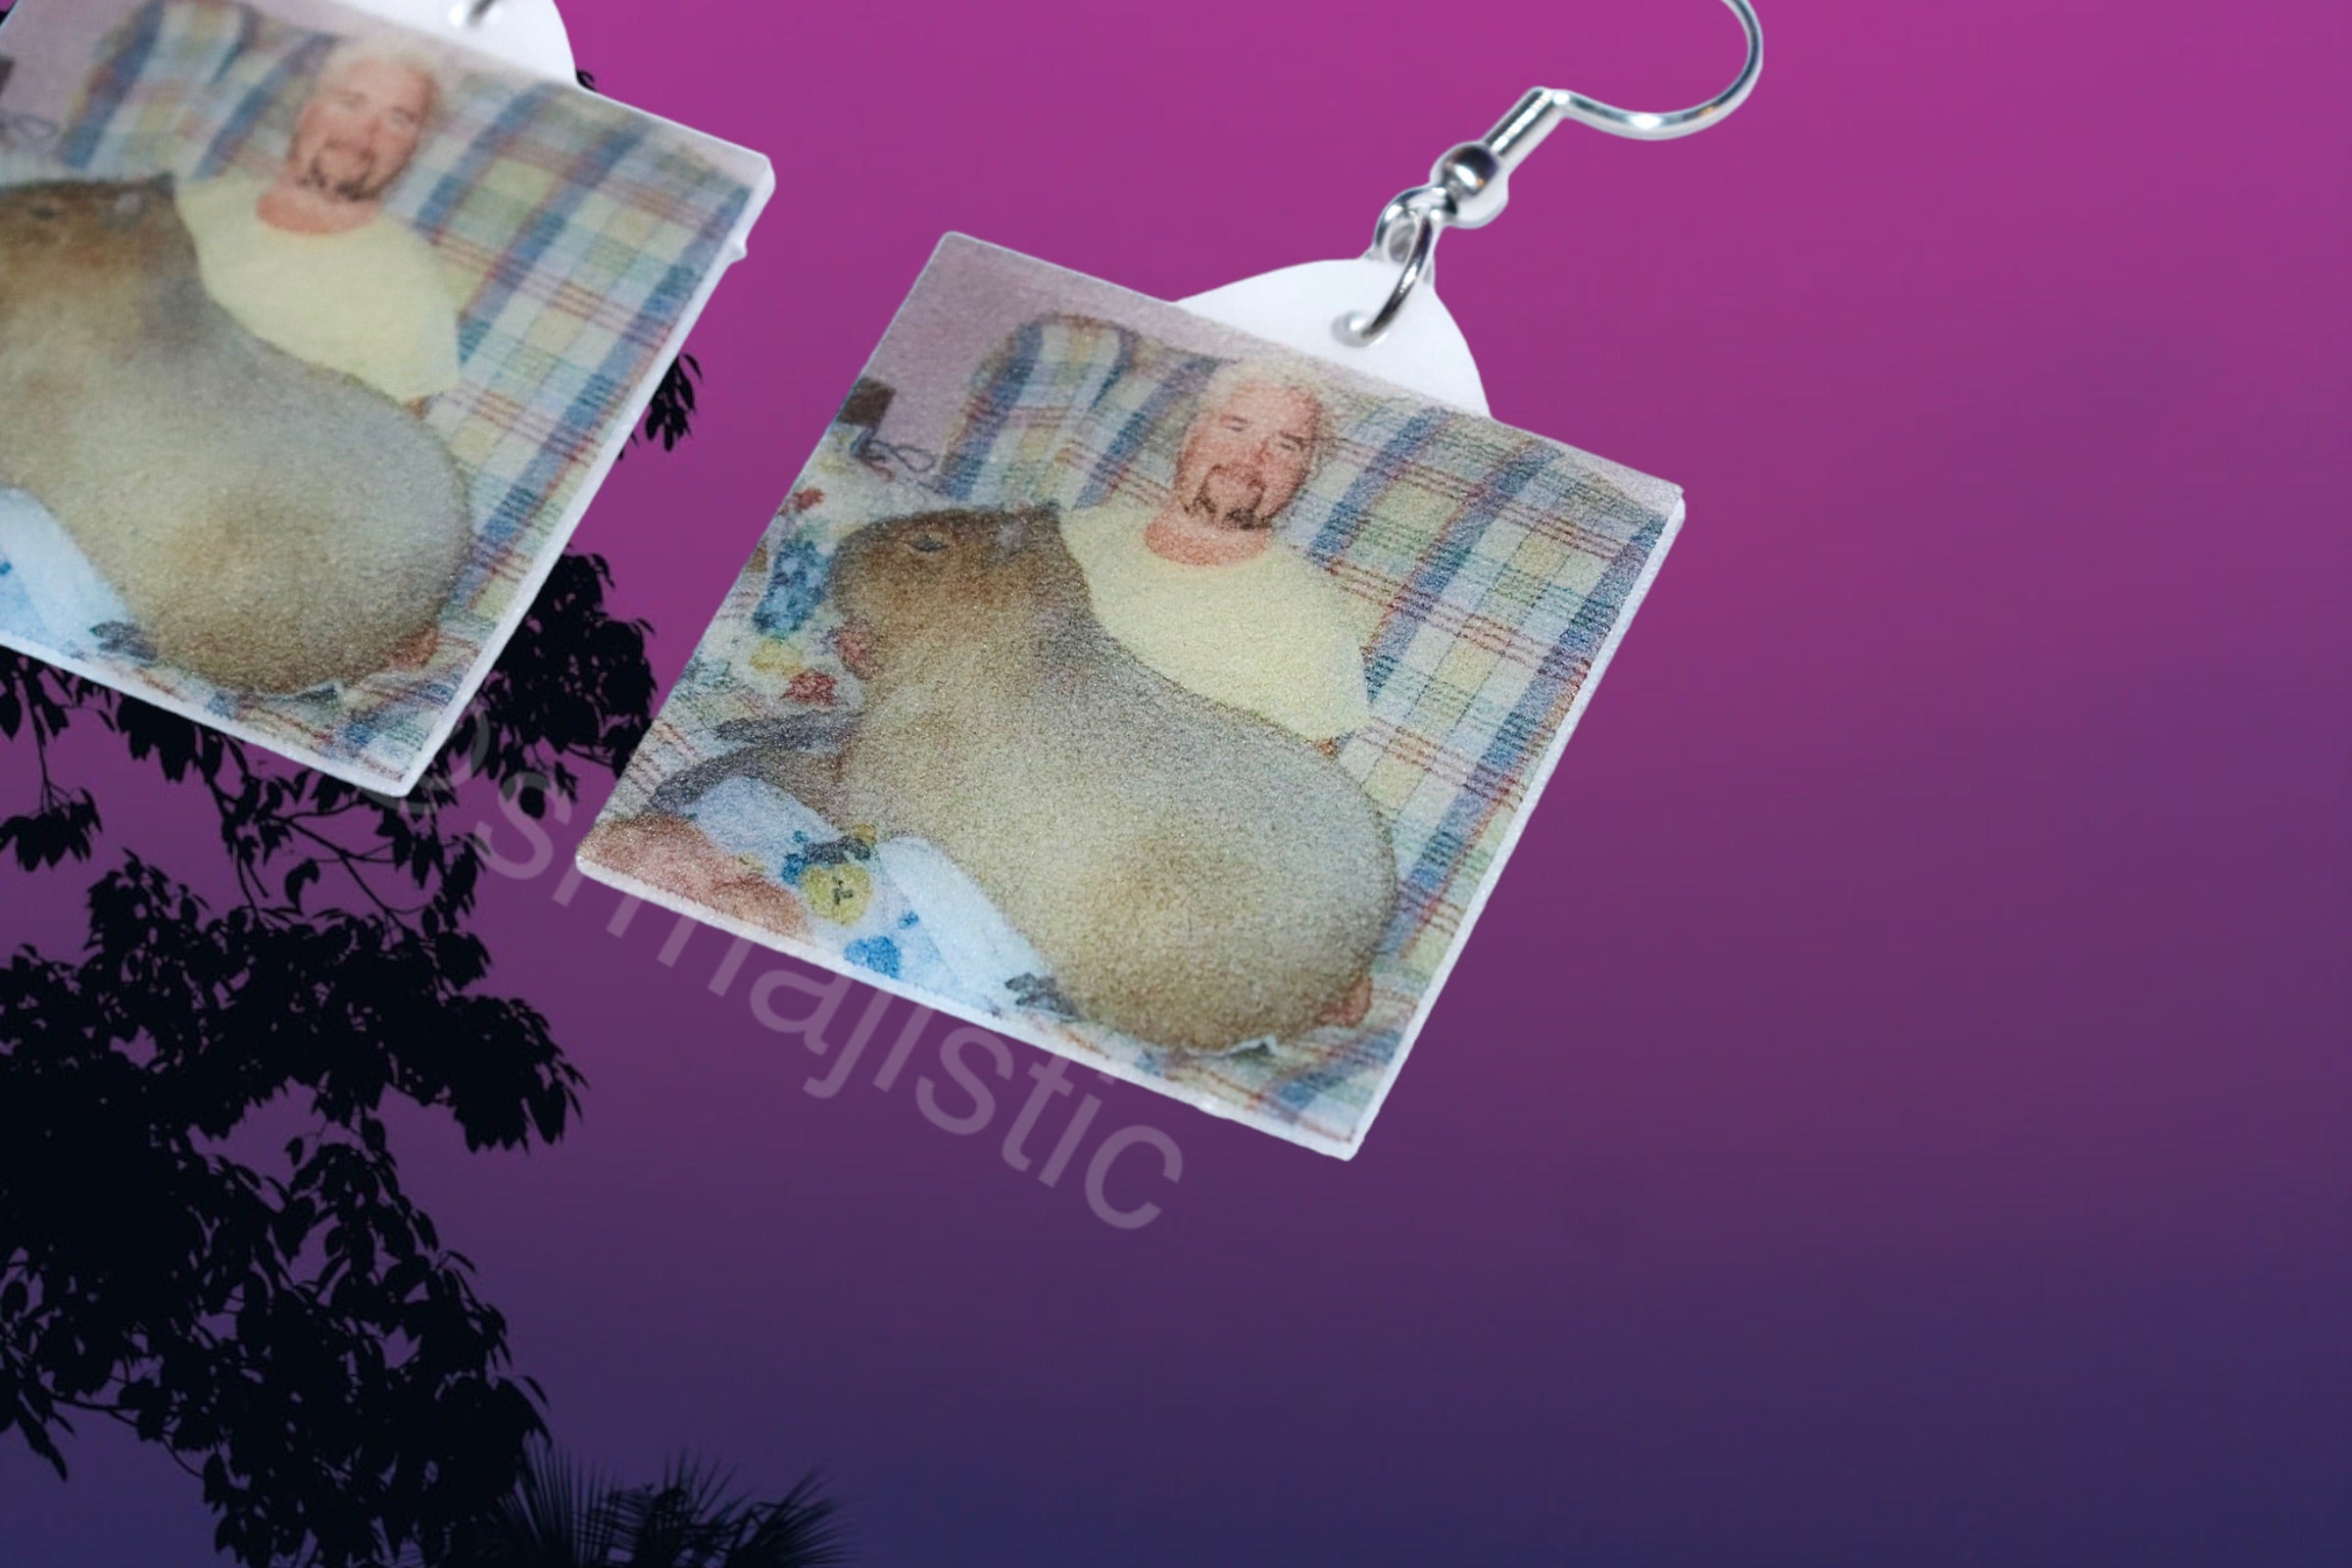 Guy Fieri Holding Capybara Funny Meme Handmade Earrings!